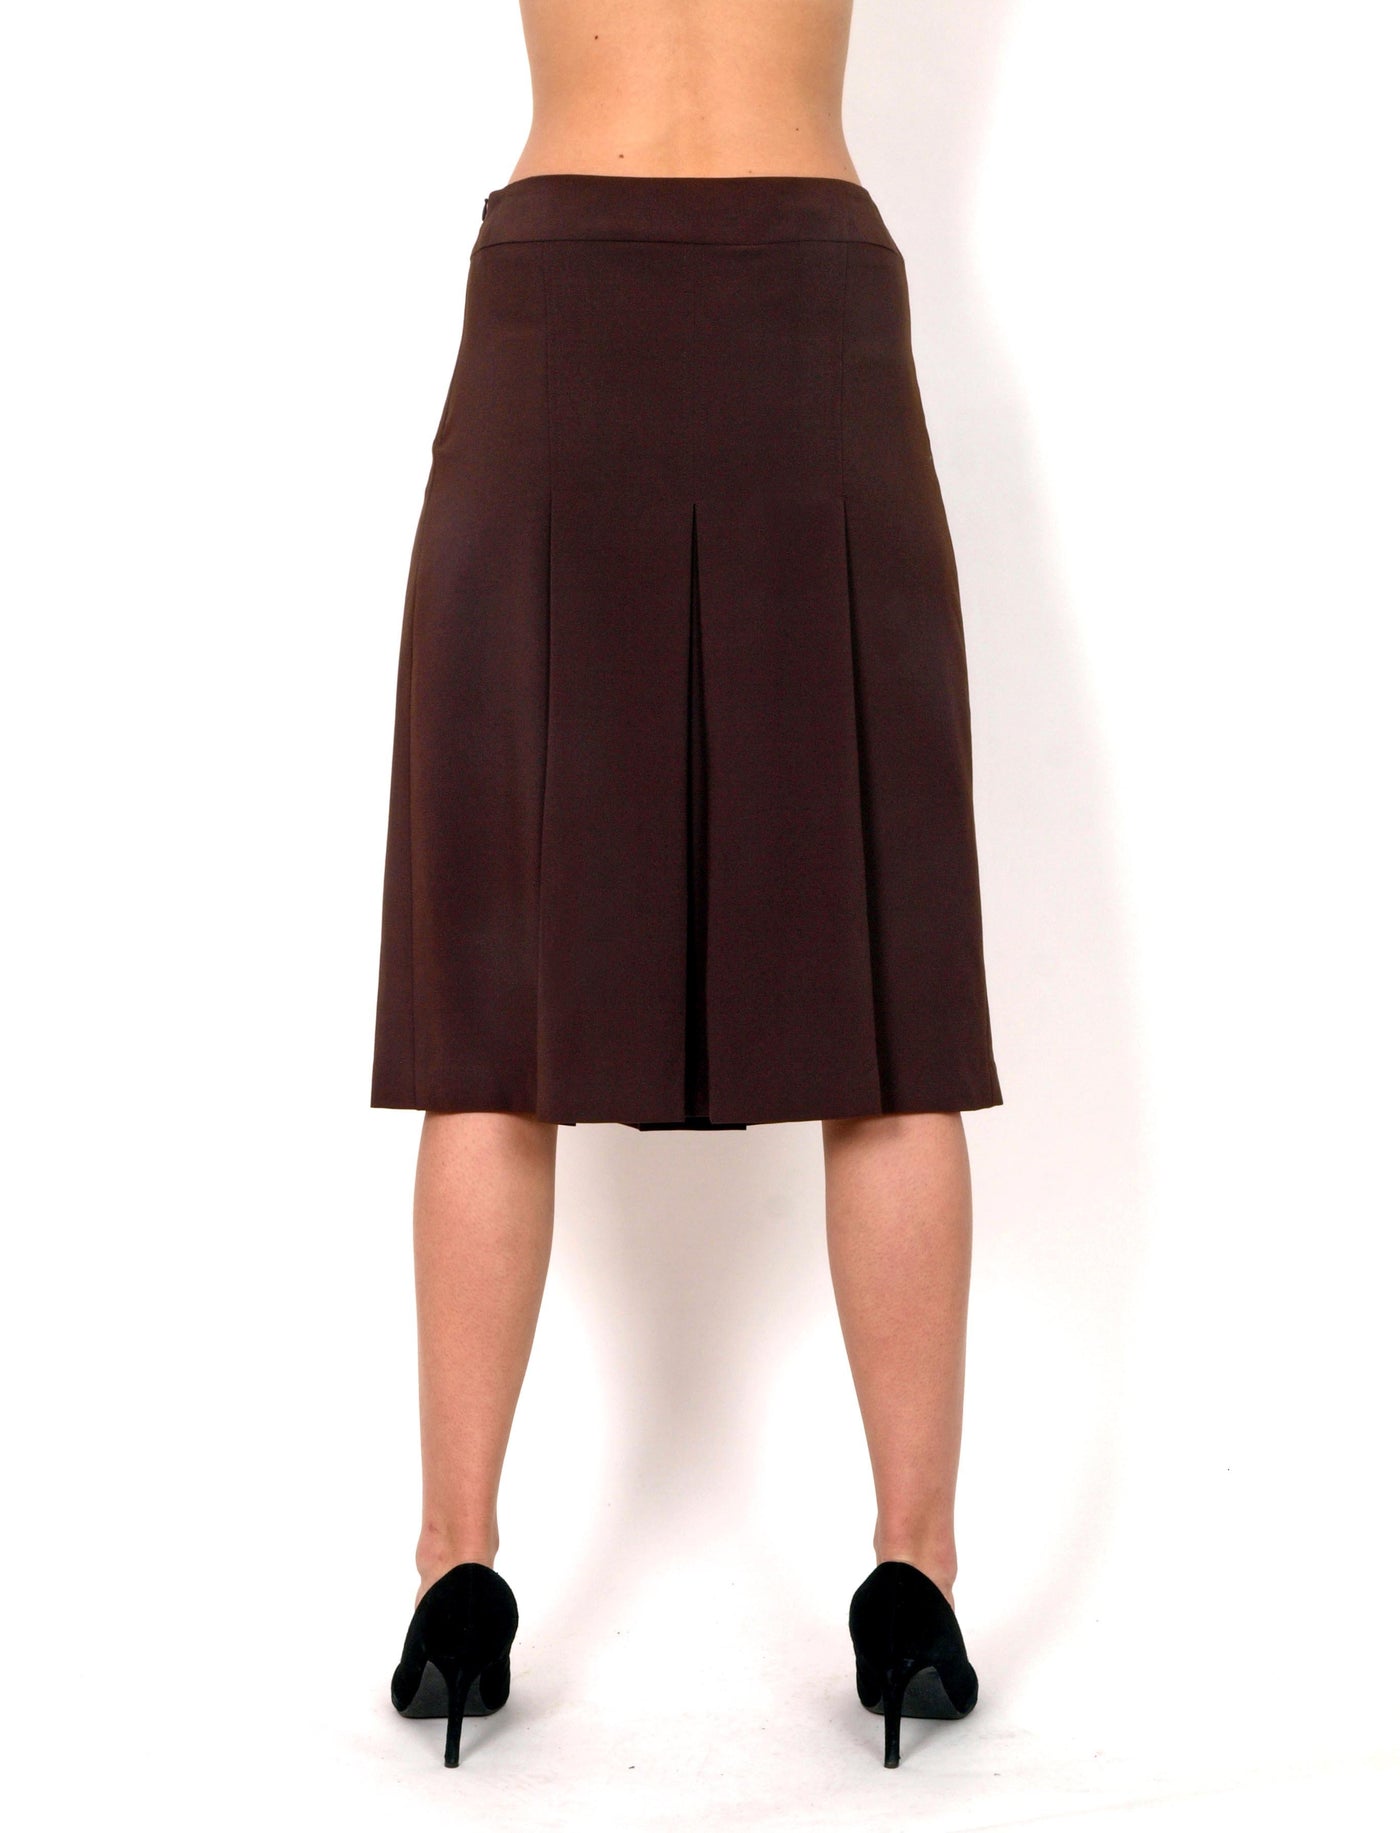 Brown skirt on folds A cut